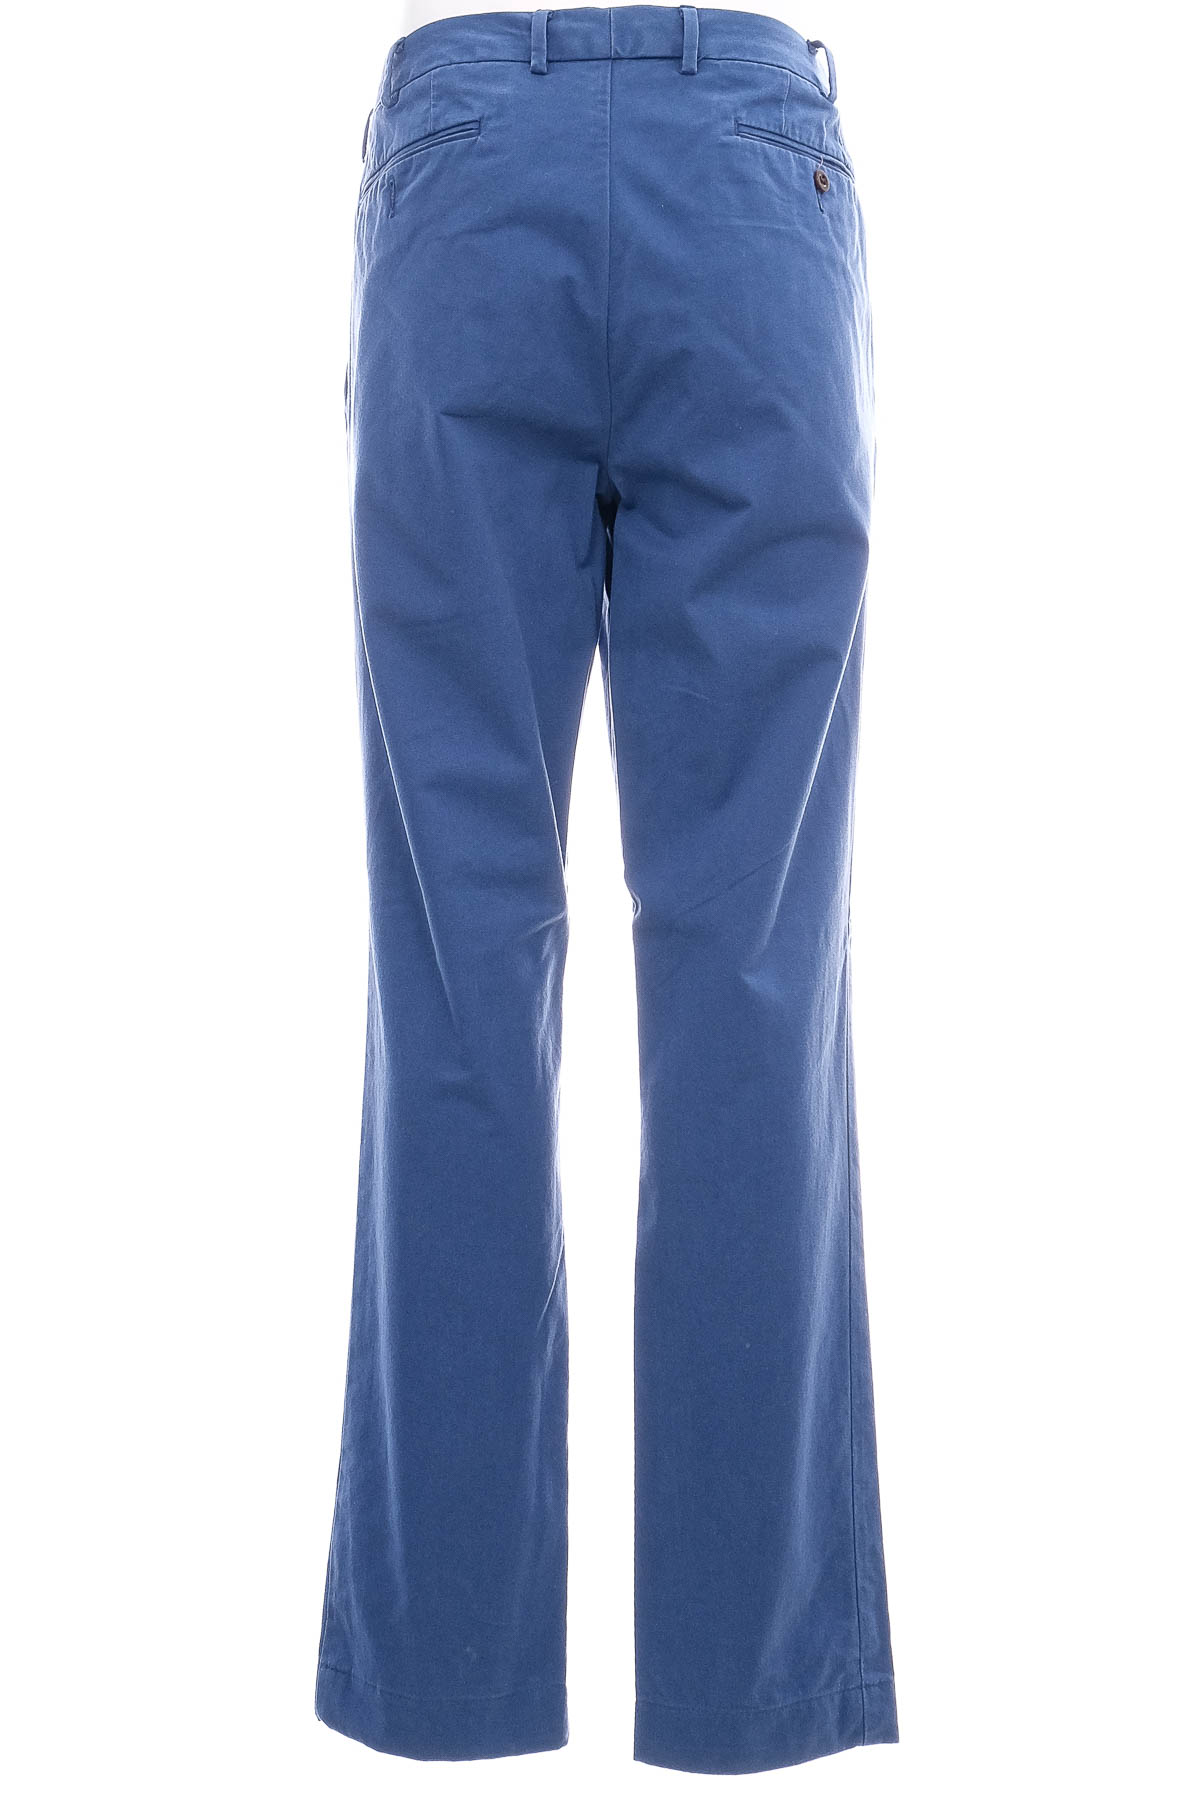 Pantalon pentru bărbați - POLO RALPH LAUREN - 1